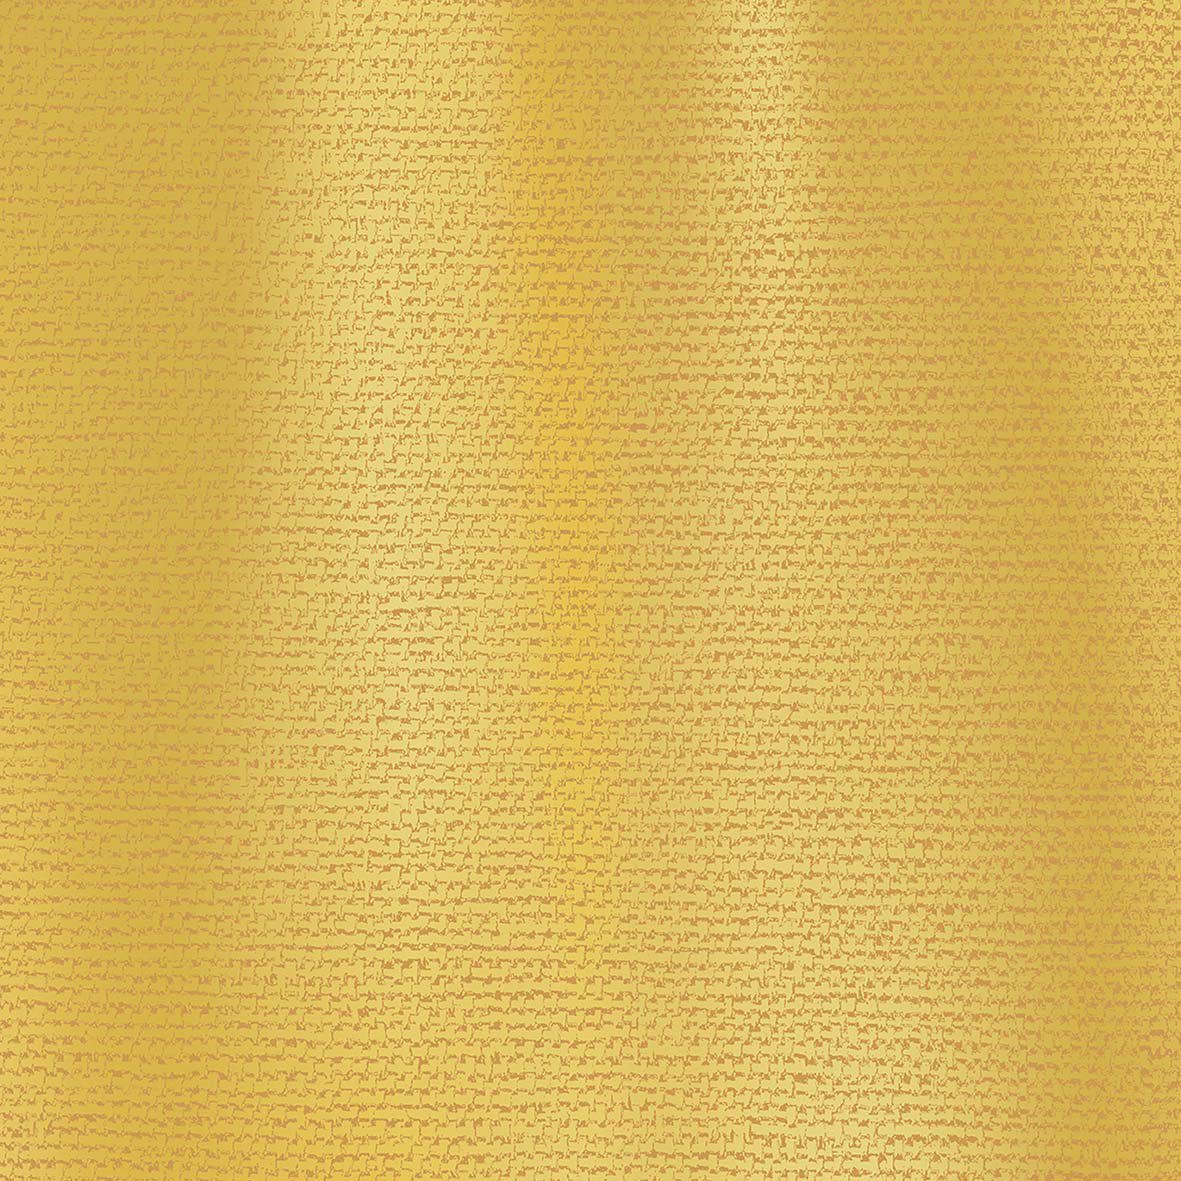 Canvas gold Napkin 25x25